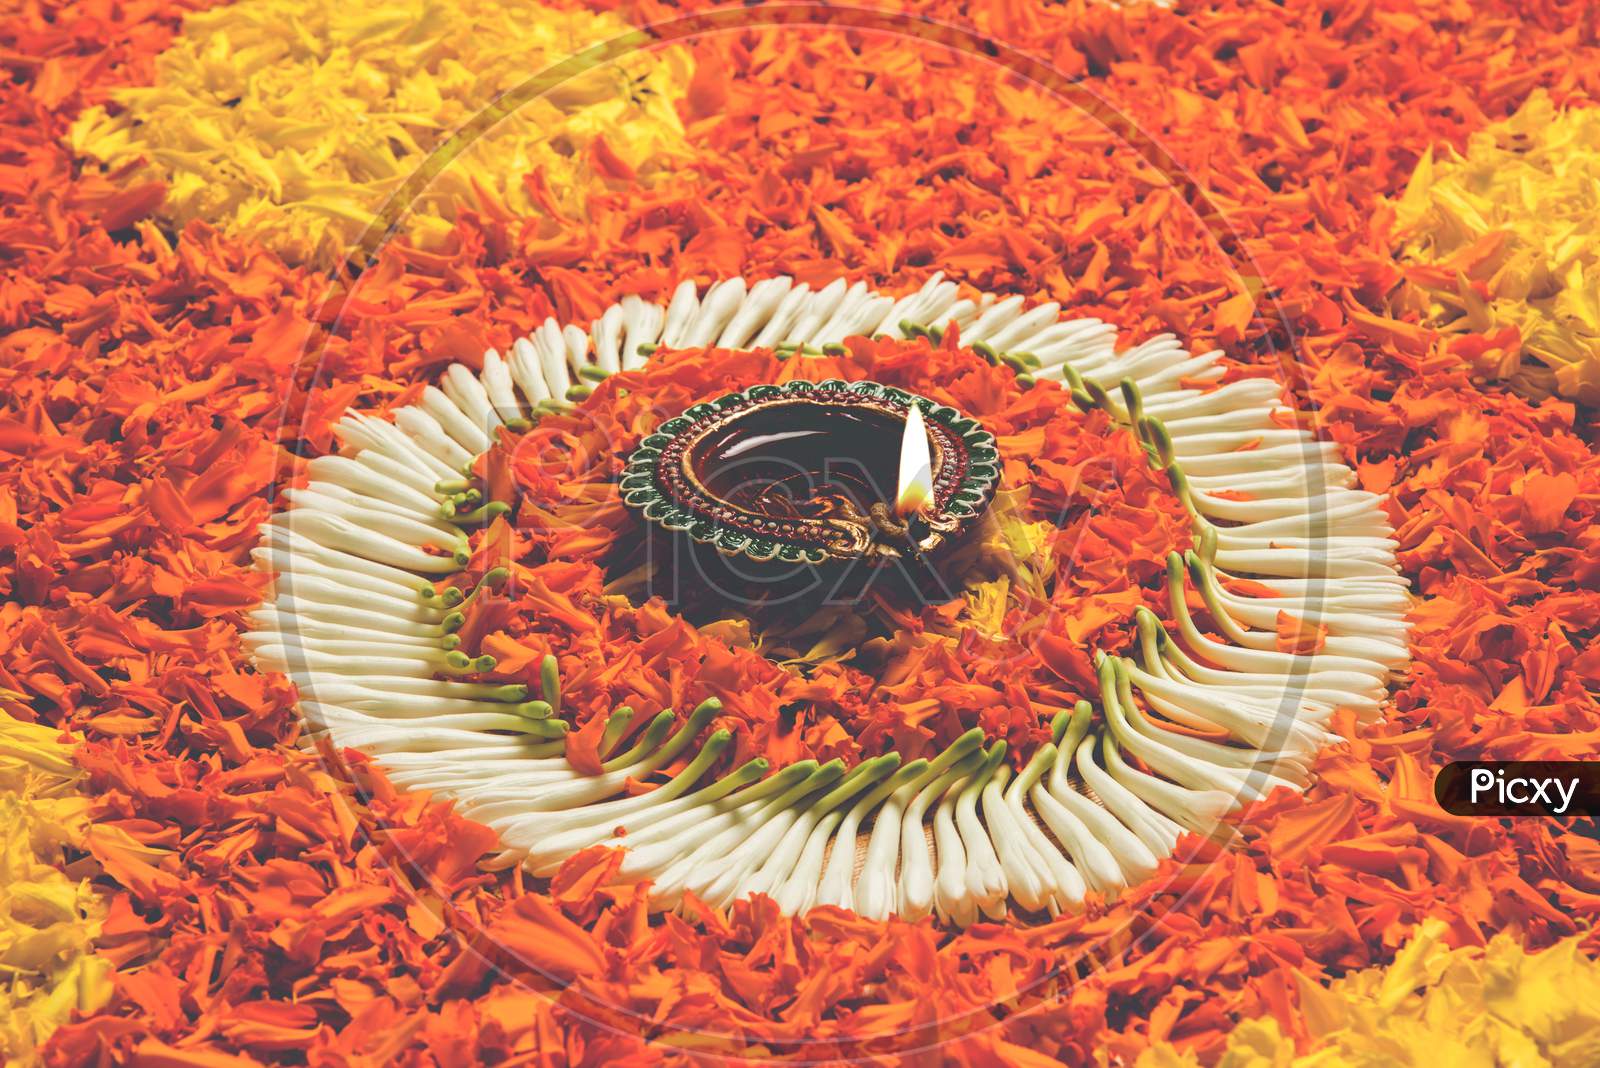 flower rangoli for Diwali or pongal with diya or clay oil lamp